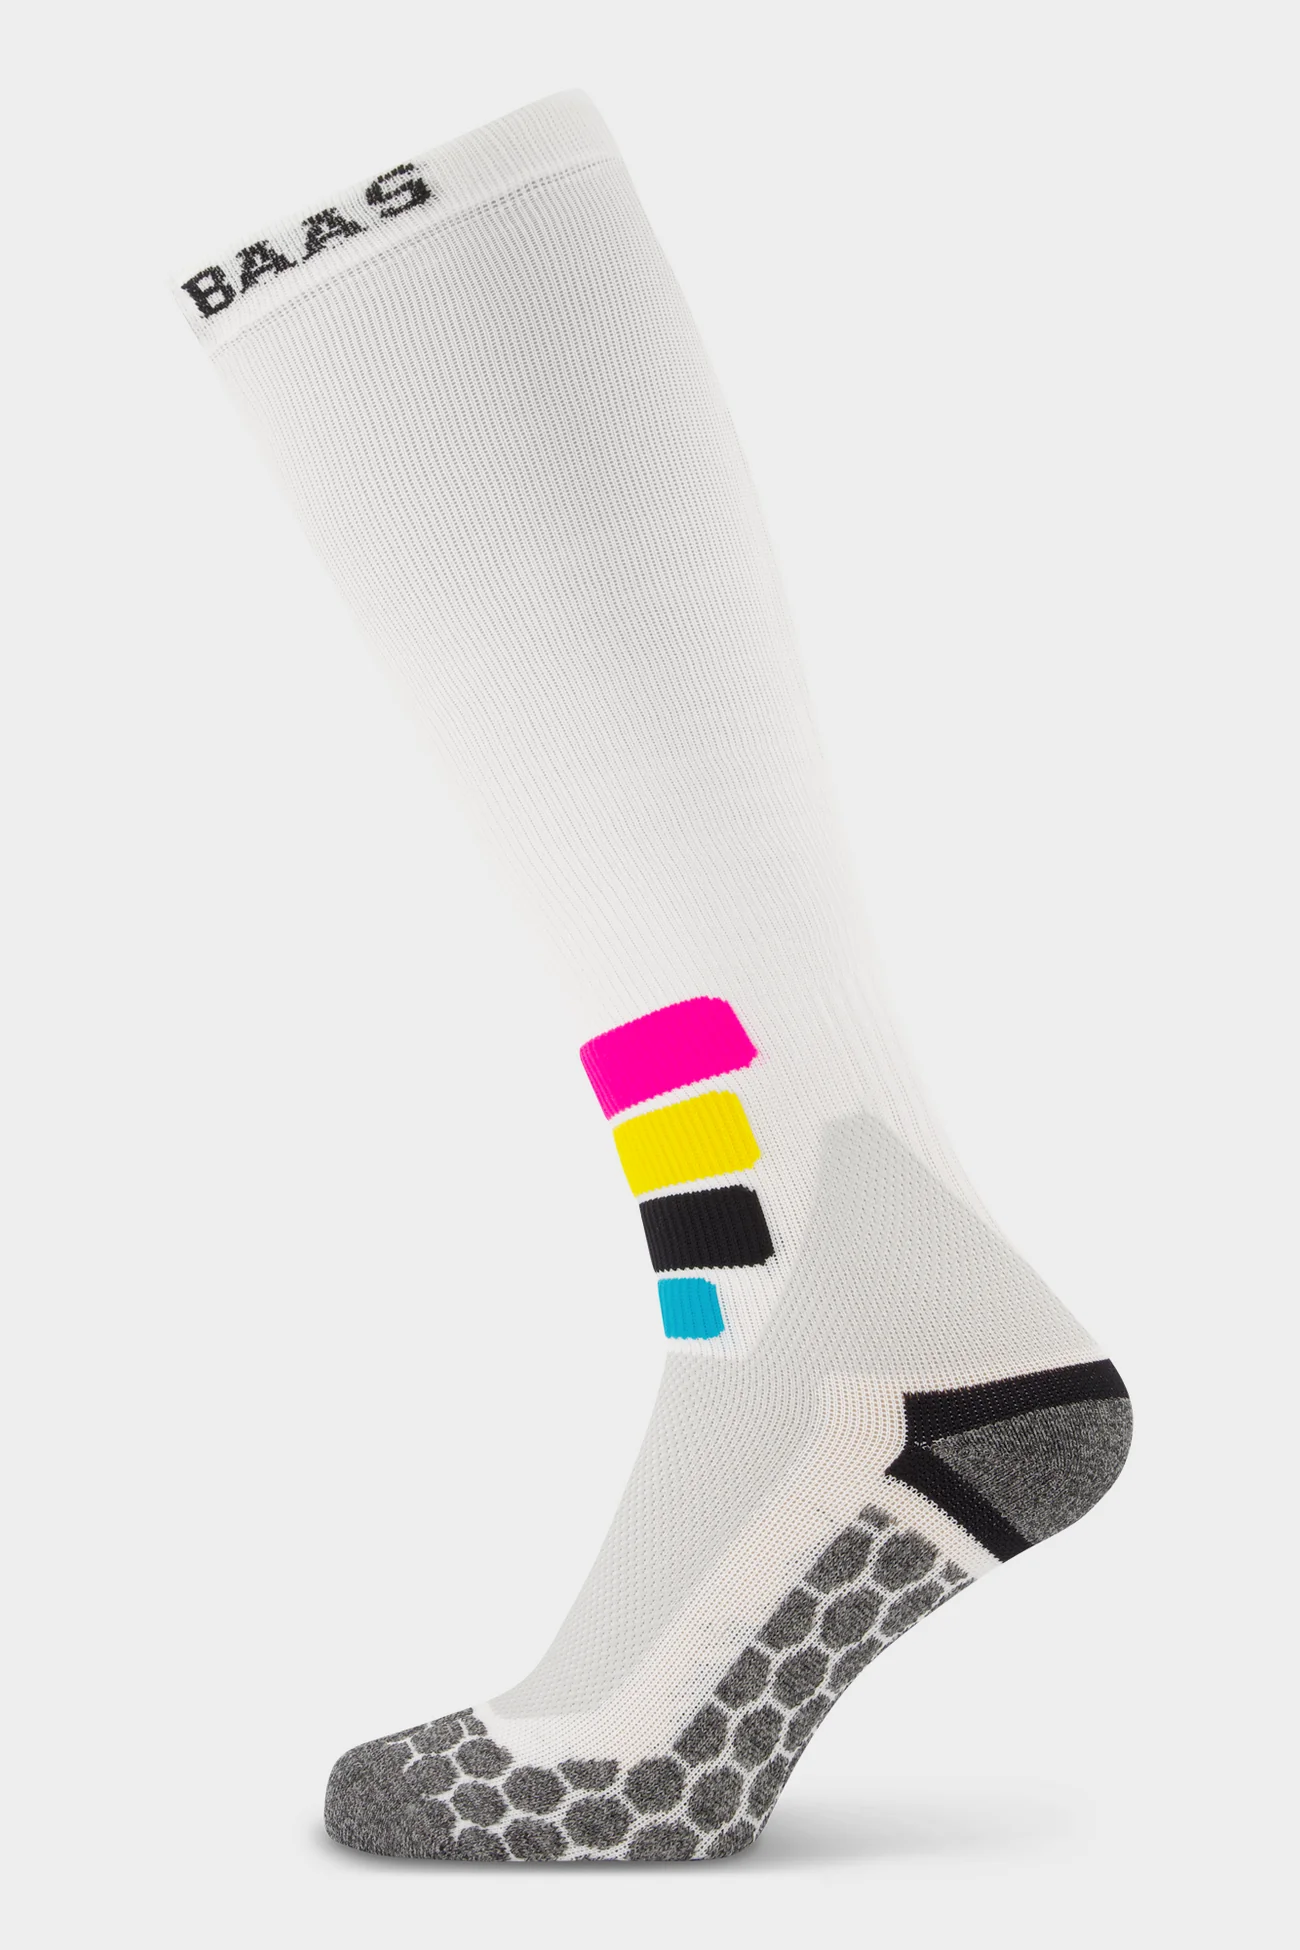 Poederbaas Technical Ski Socks Compress Merino Pro wit 